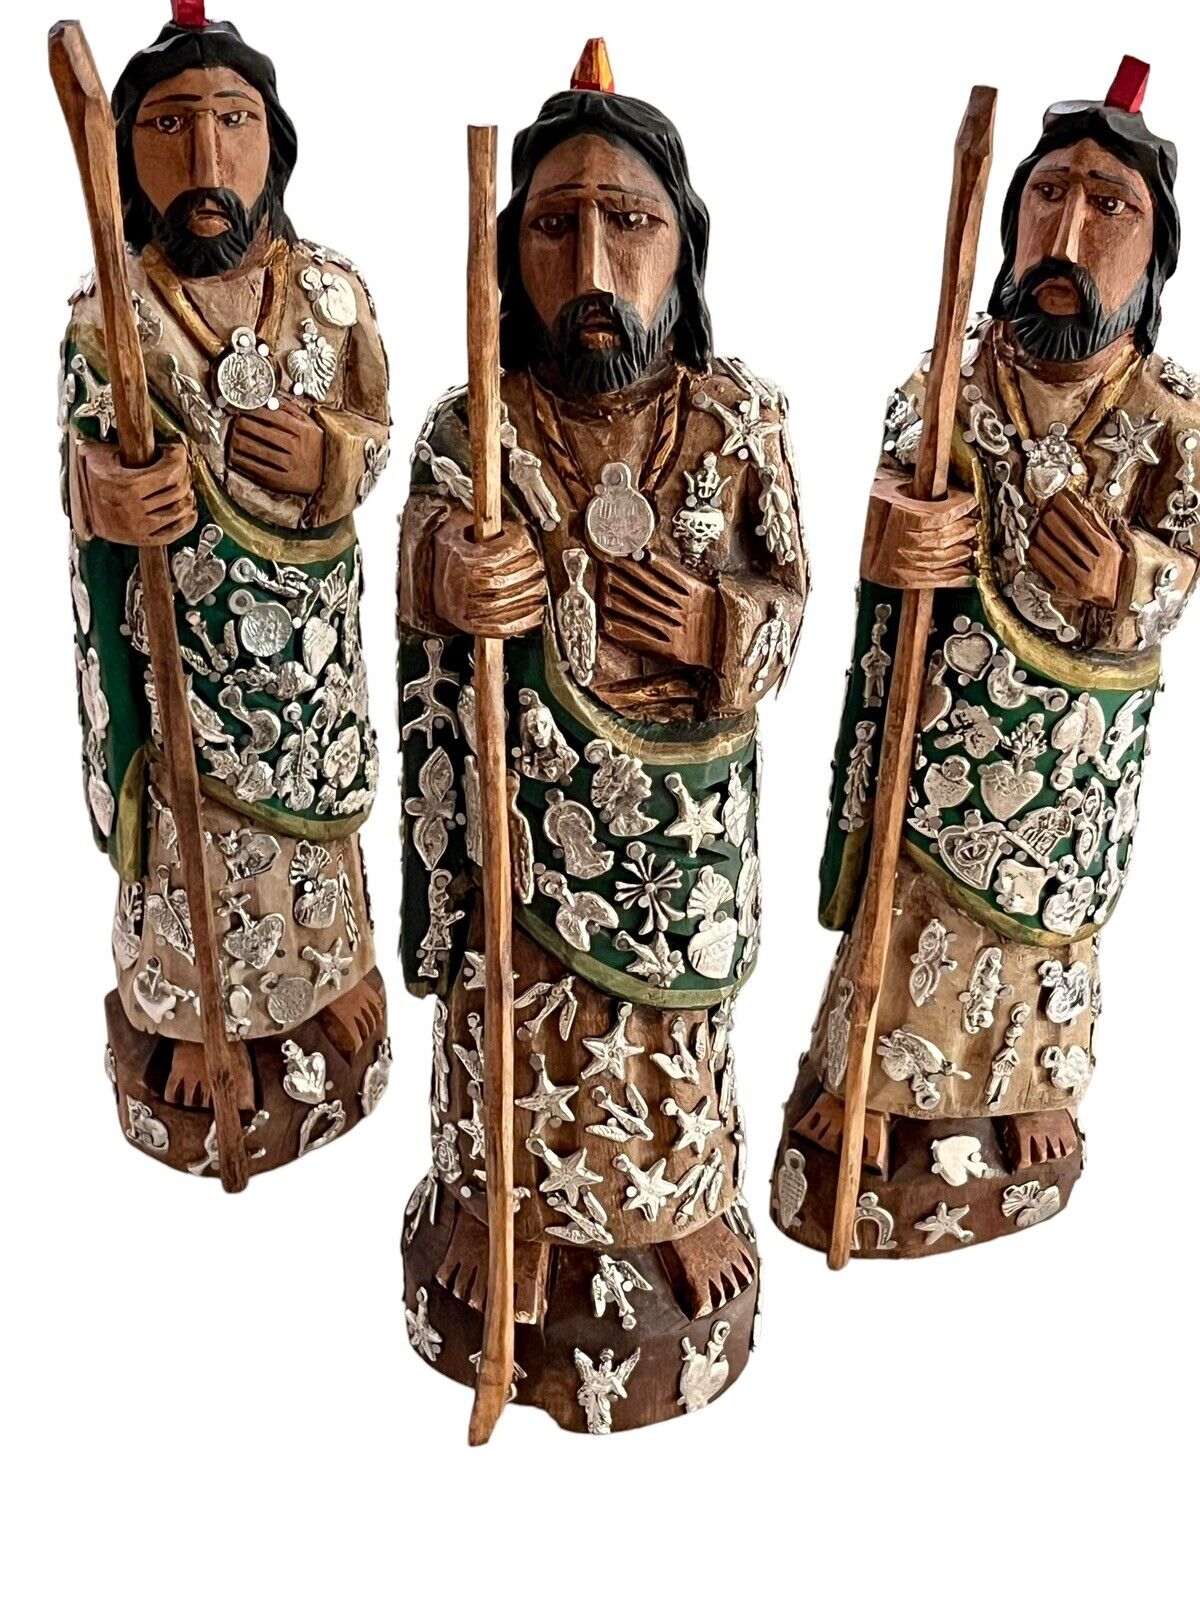 Saint JUDAS Figurine w MILAGROS Mexican Santo, Patron Saint of Hope-St Jude 12”